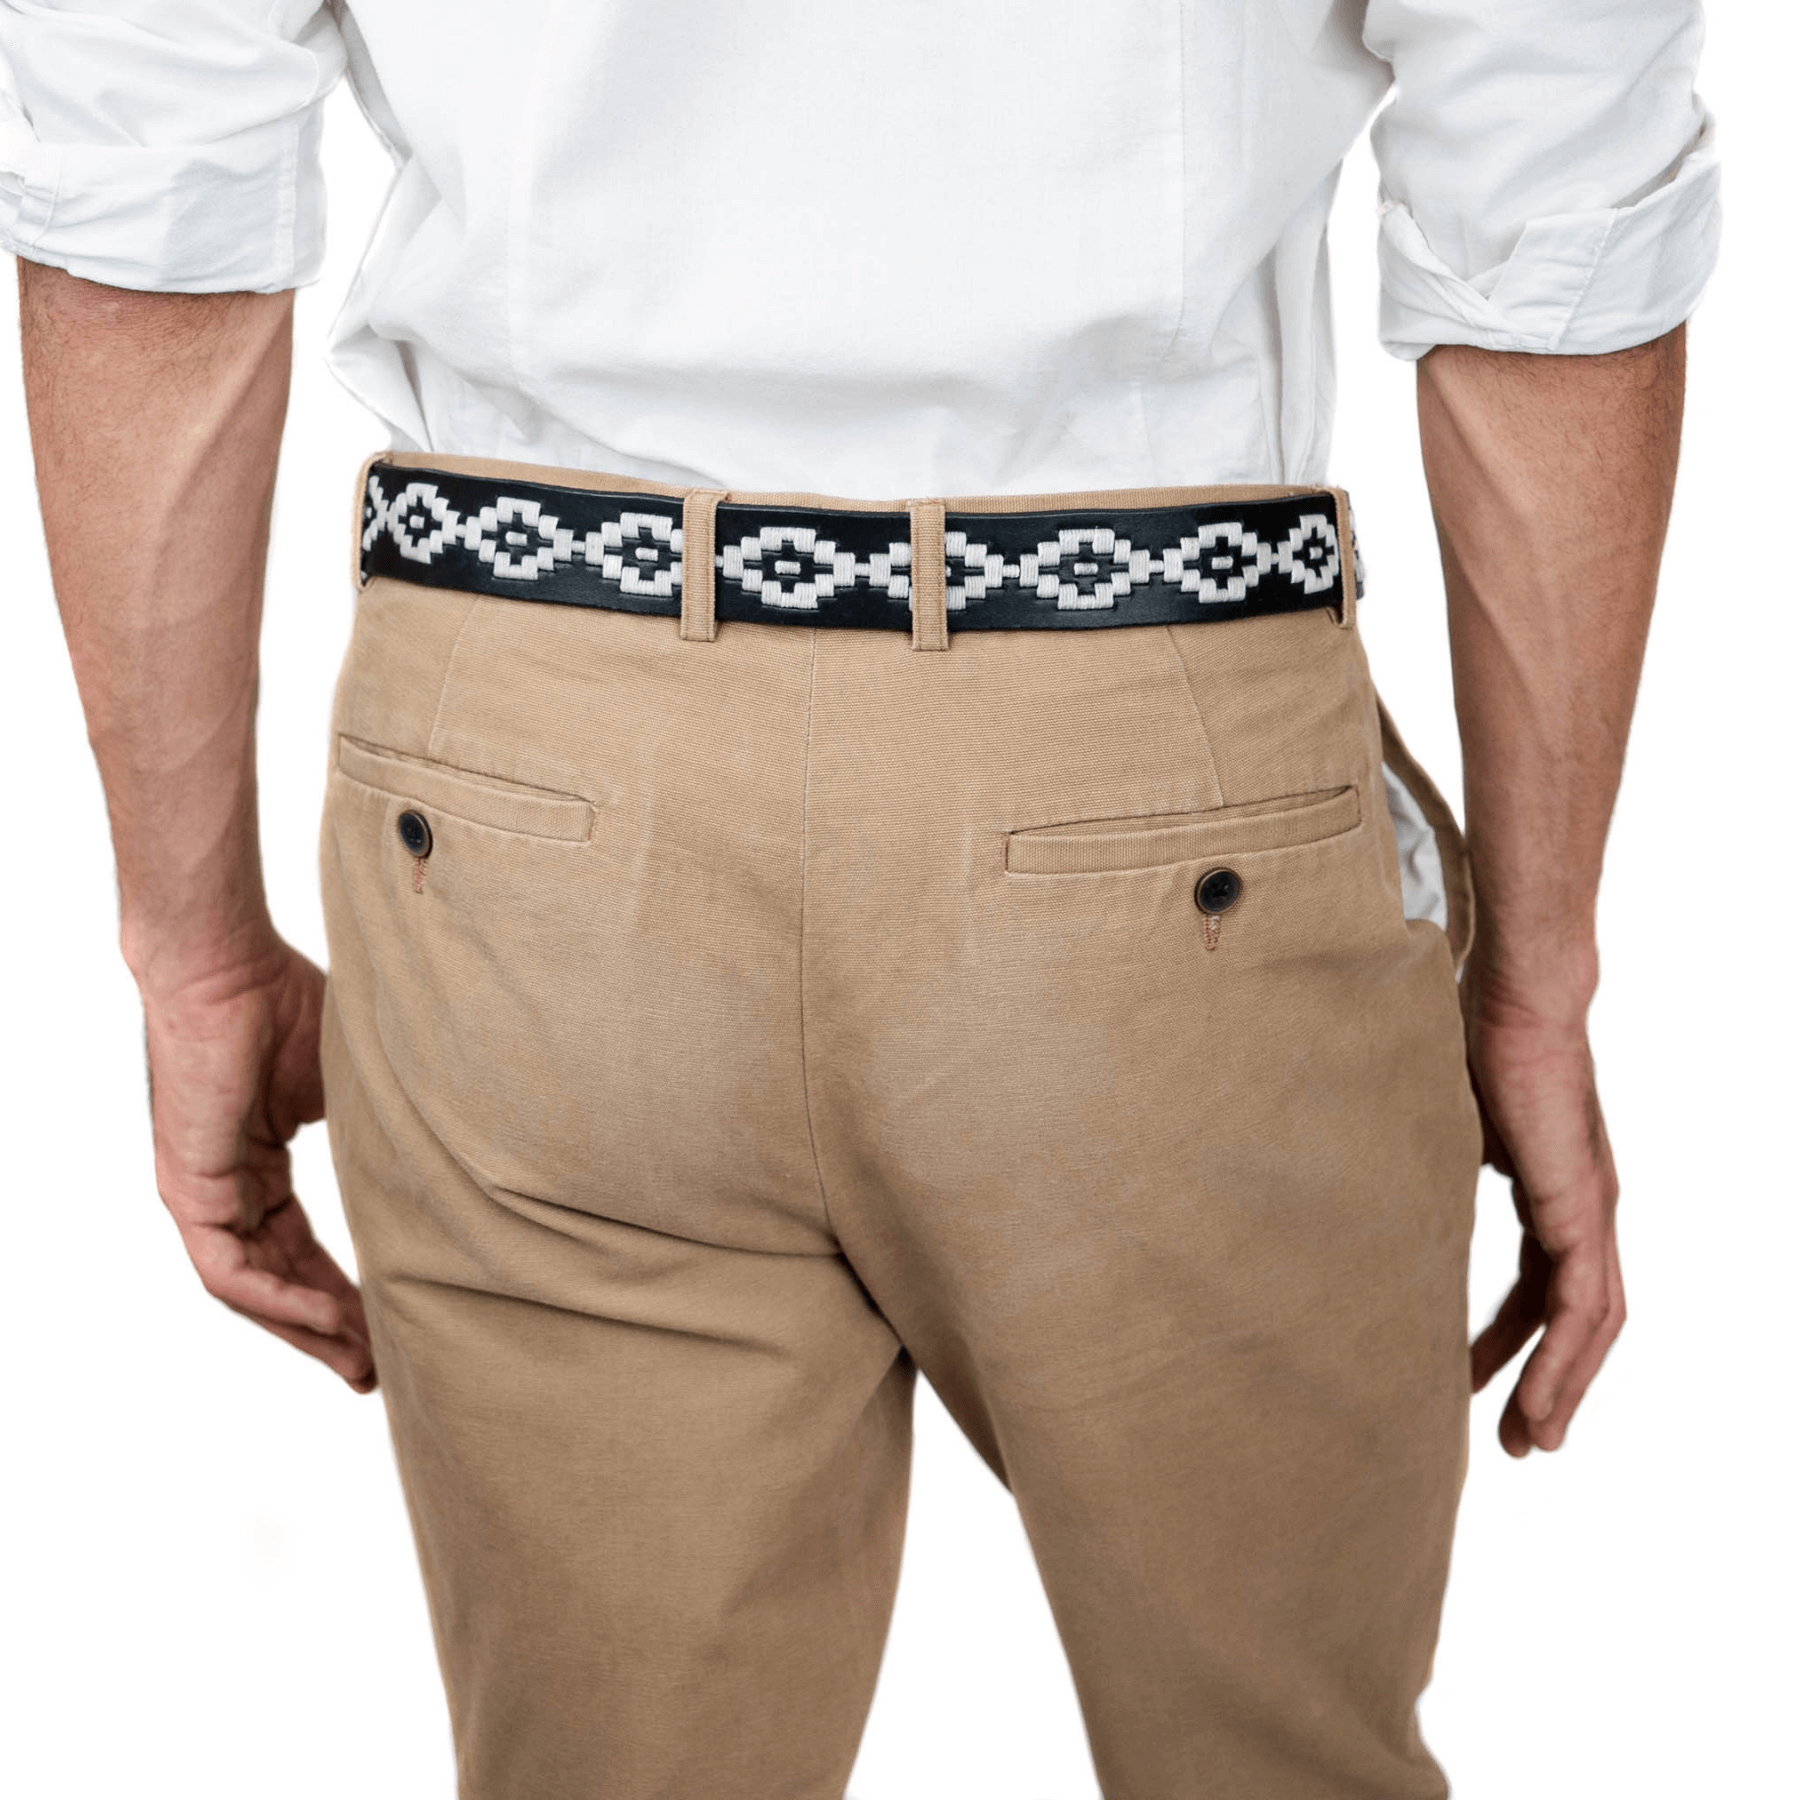 Gaucholife Belts Embroidered Belt (Black/White)